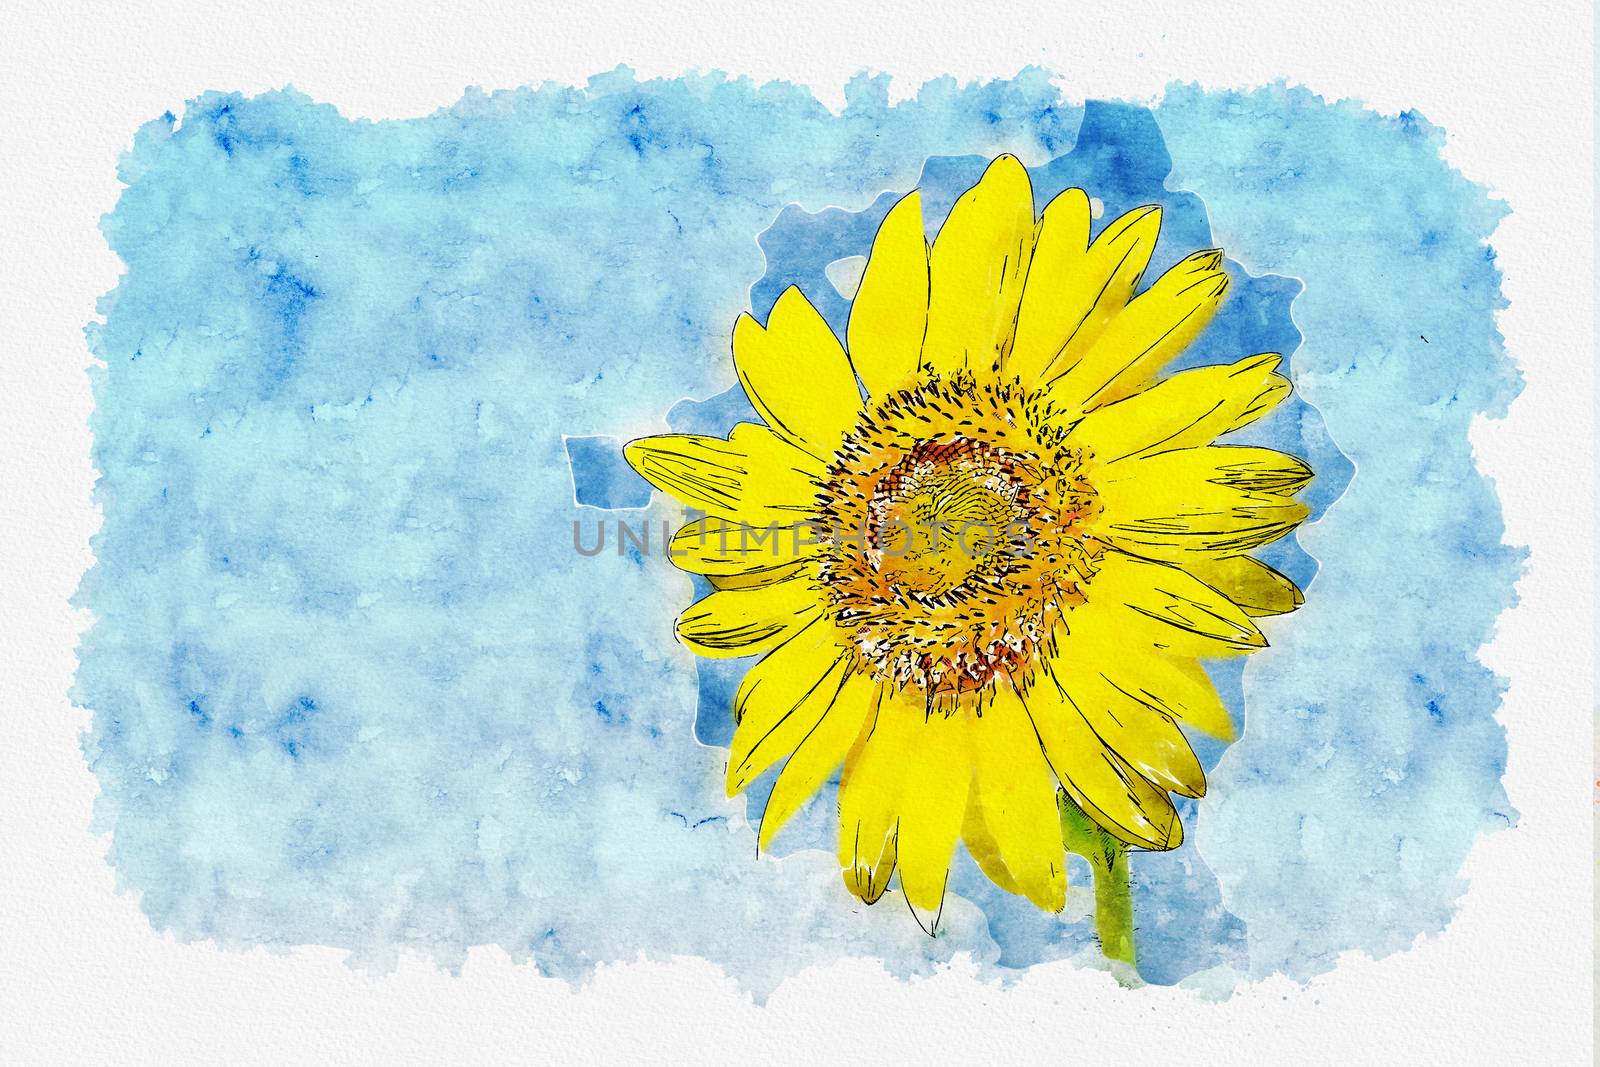 Watercolor of Sunflower field in blue sky by pkproject